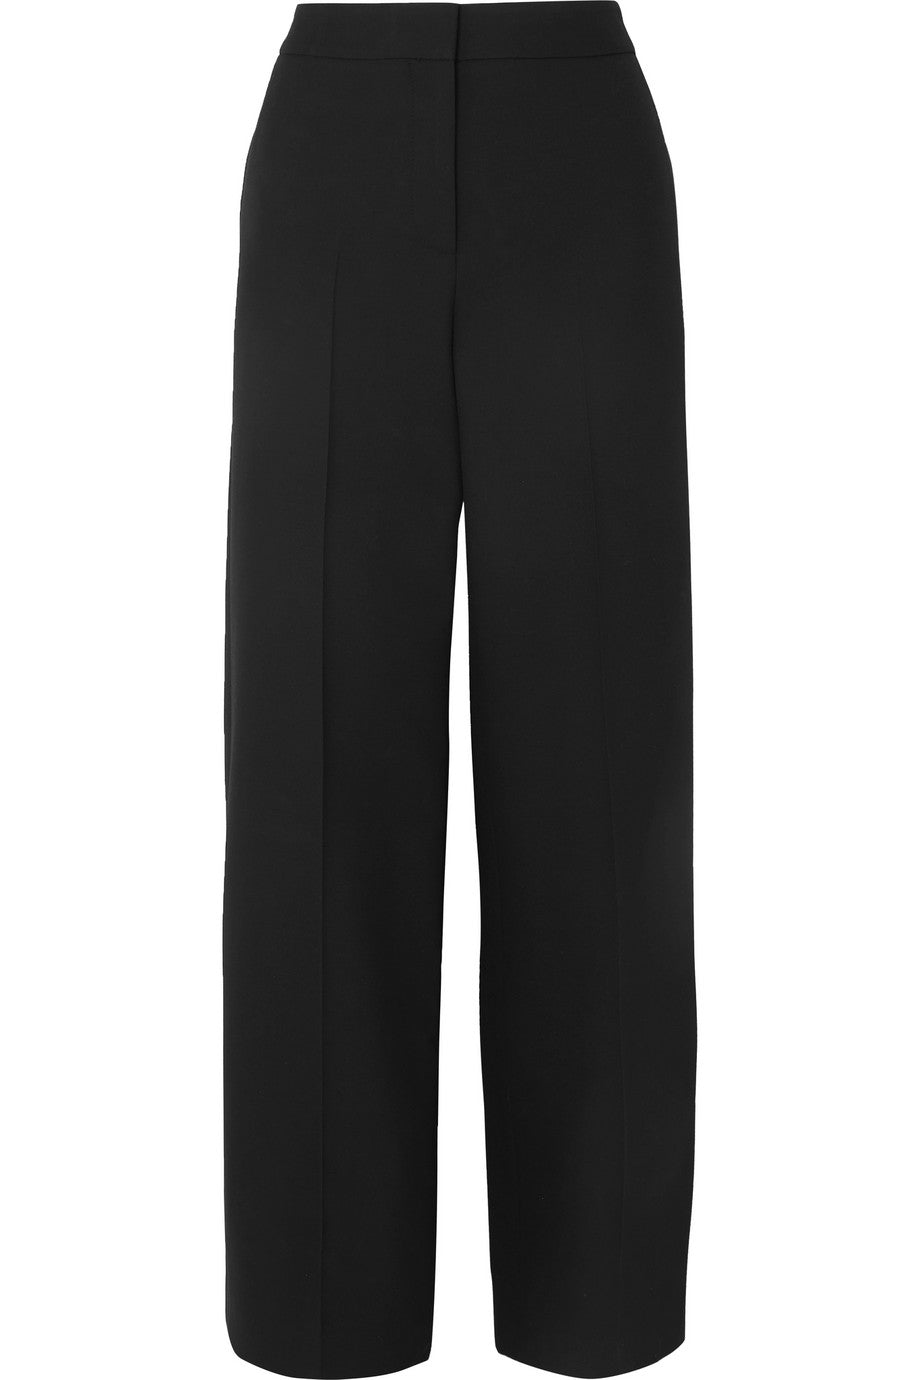 Alexander Mcqueen - Black wool-blend wide-leg pants trousers